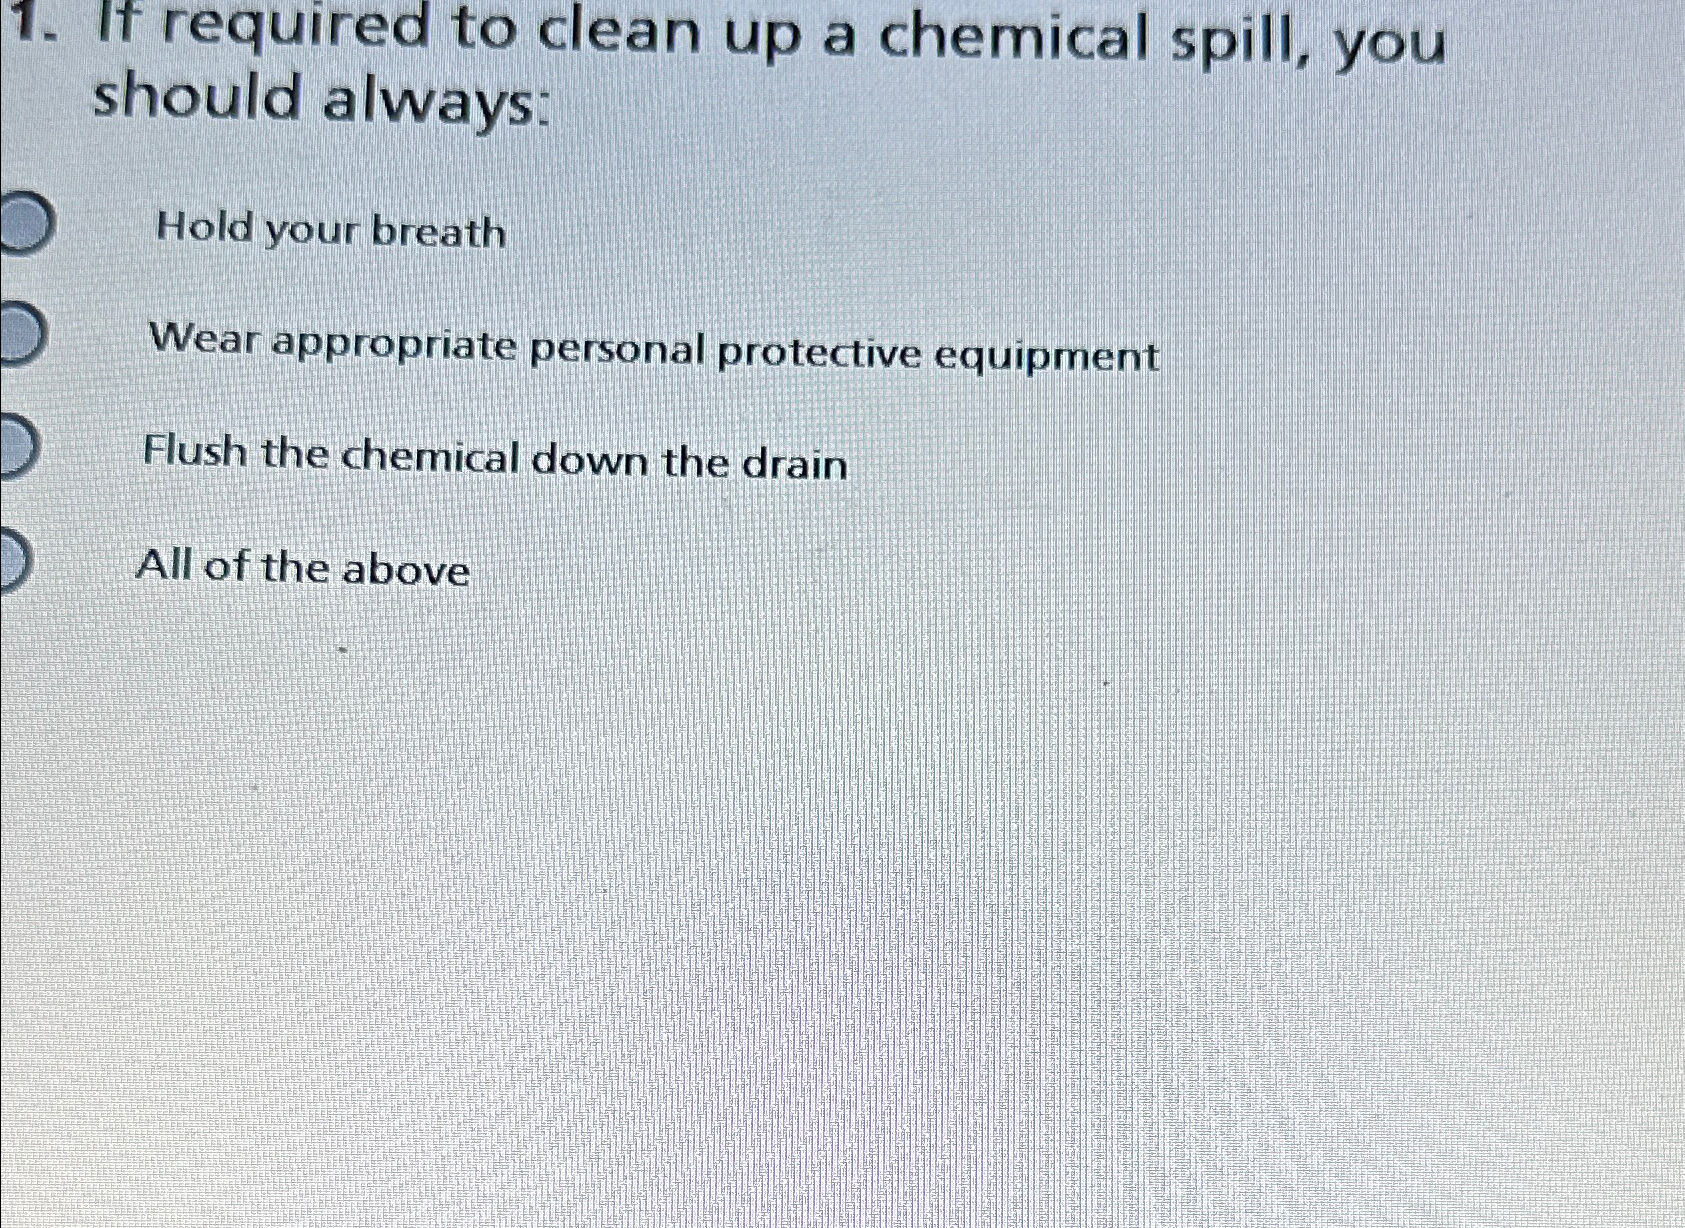 Choosing Correct PPE for Chemical Spills - Expert Advice